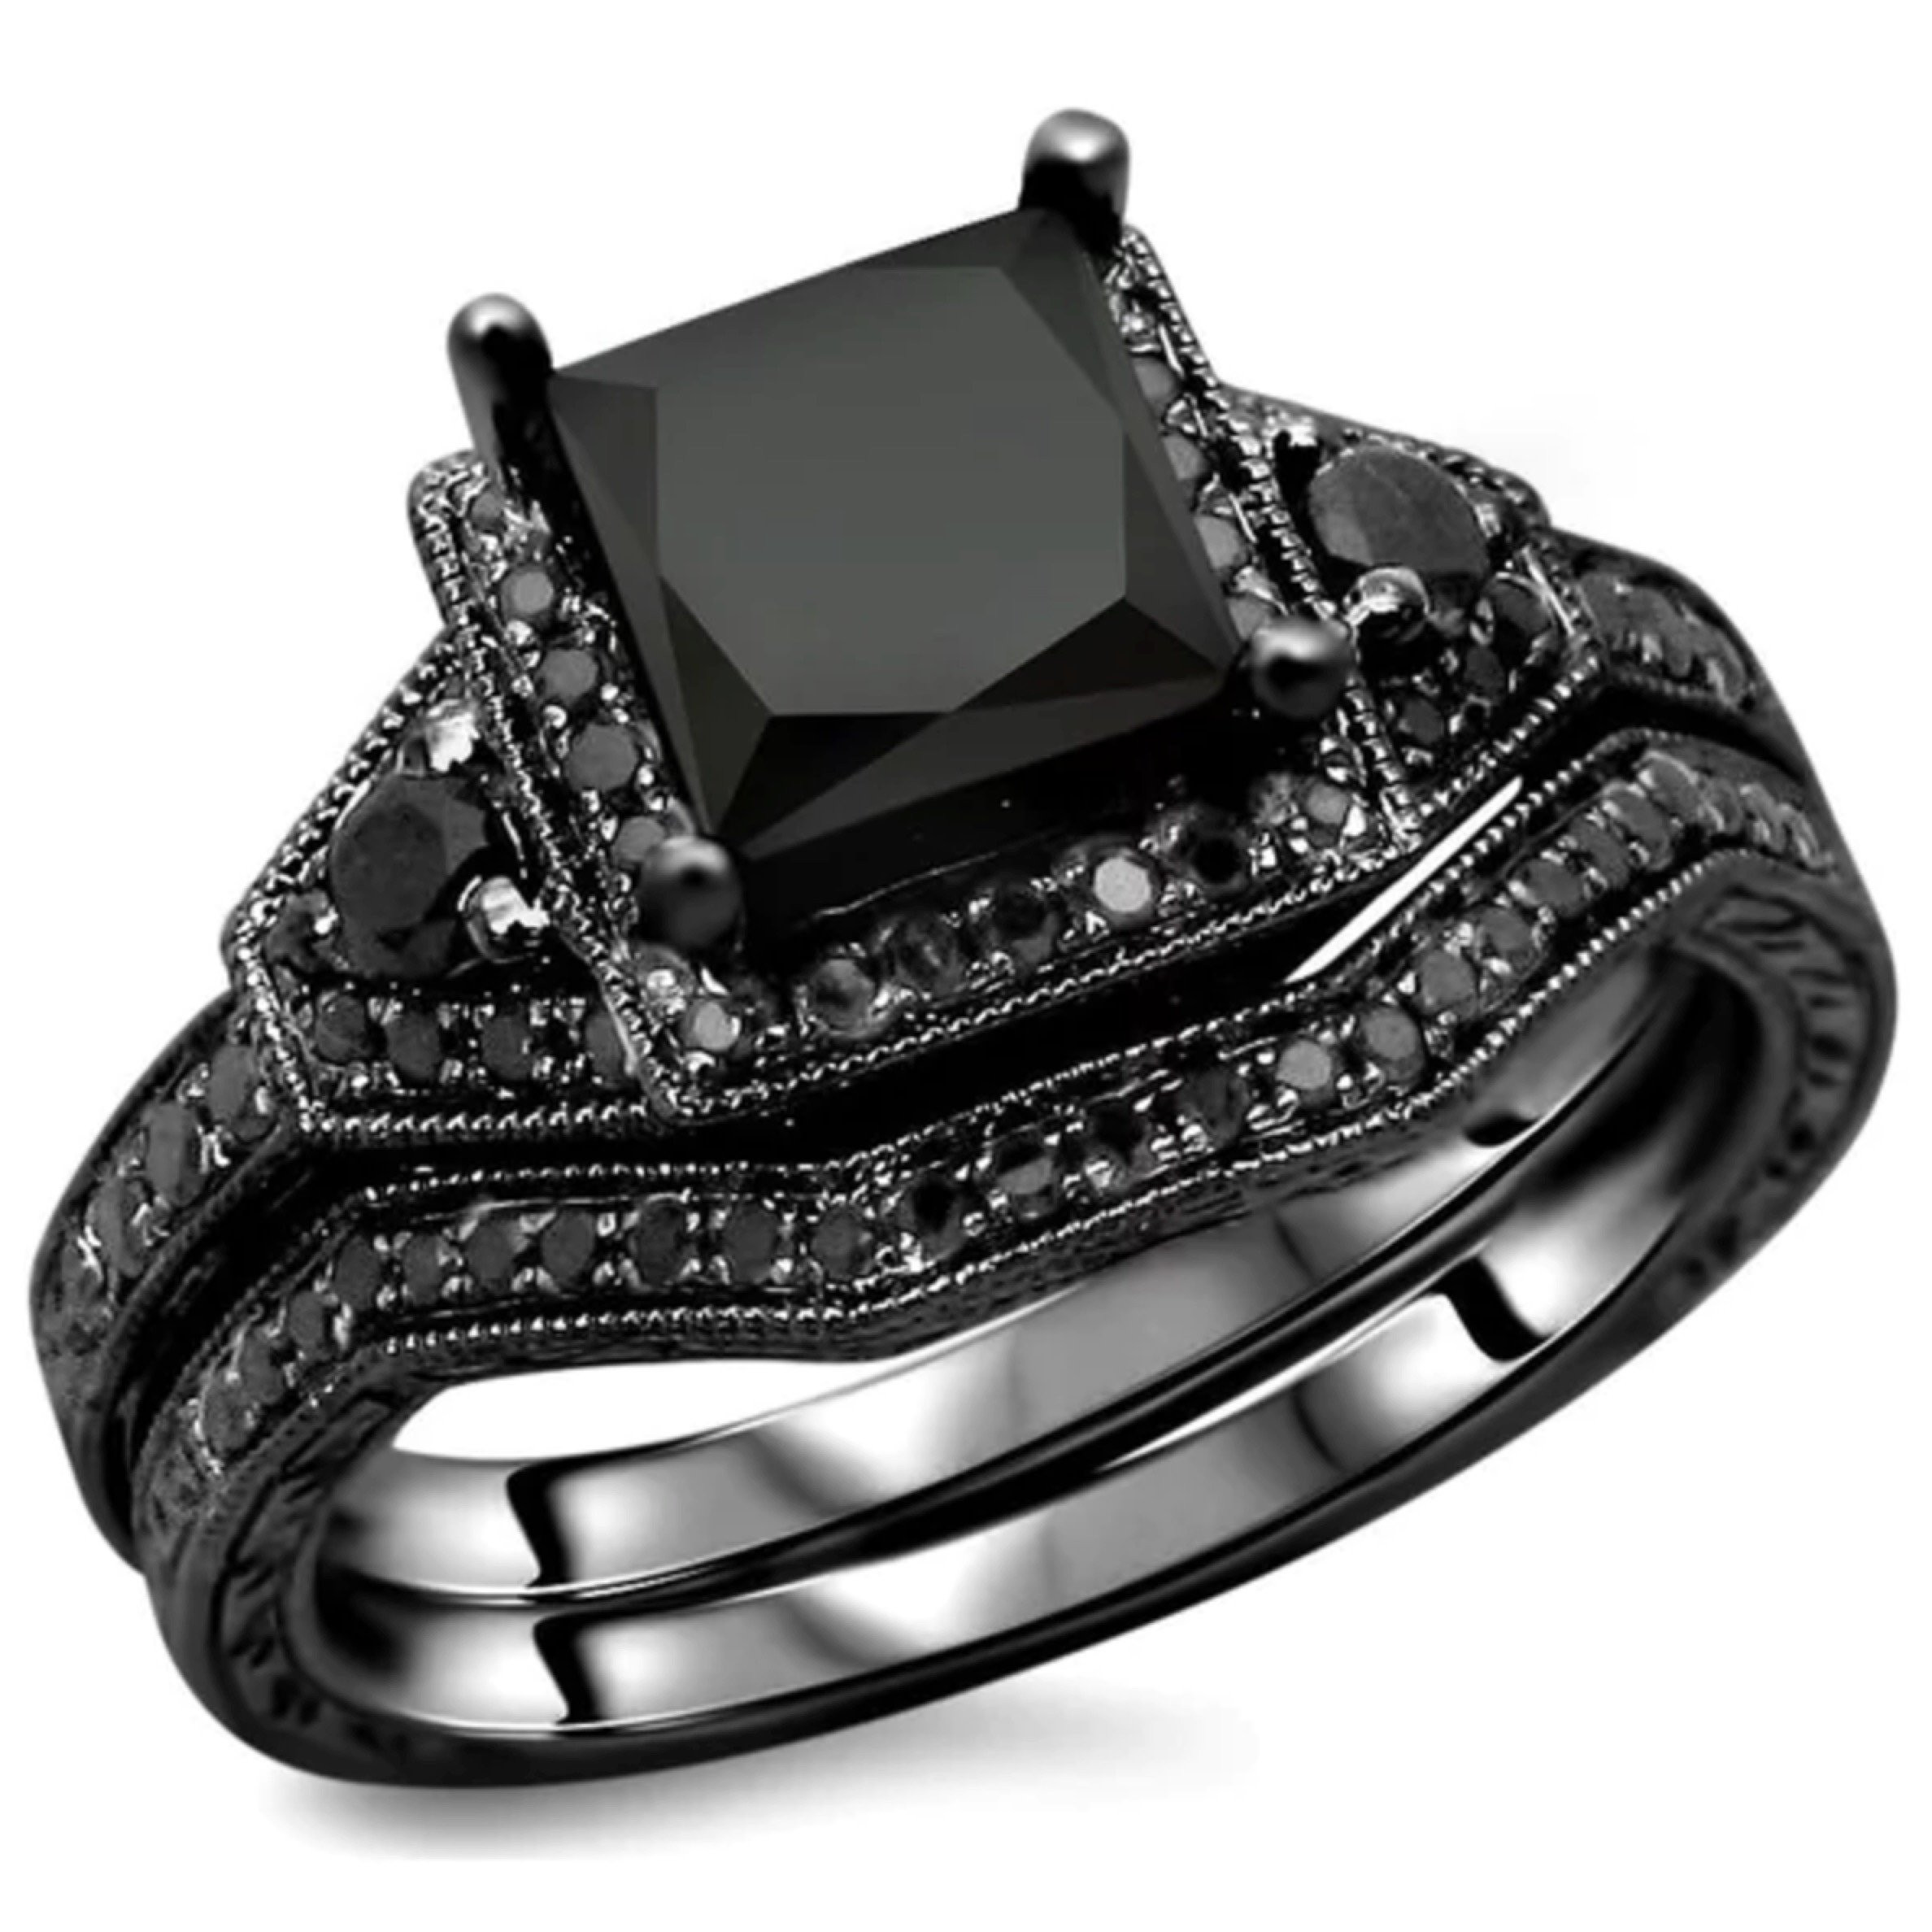 Black And White Wedding Ring Sets
 Black Diamond 925 Sterling Silver Engagement Ring Set